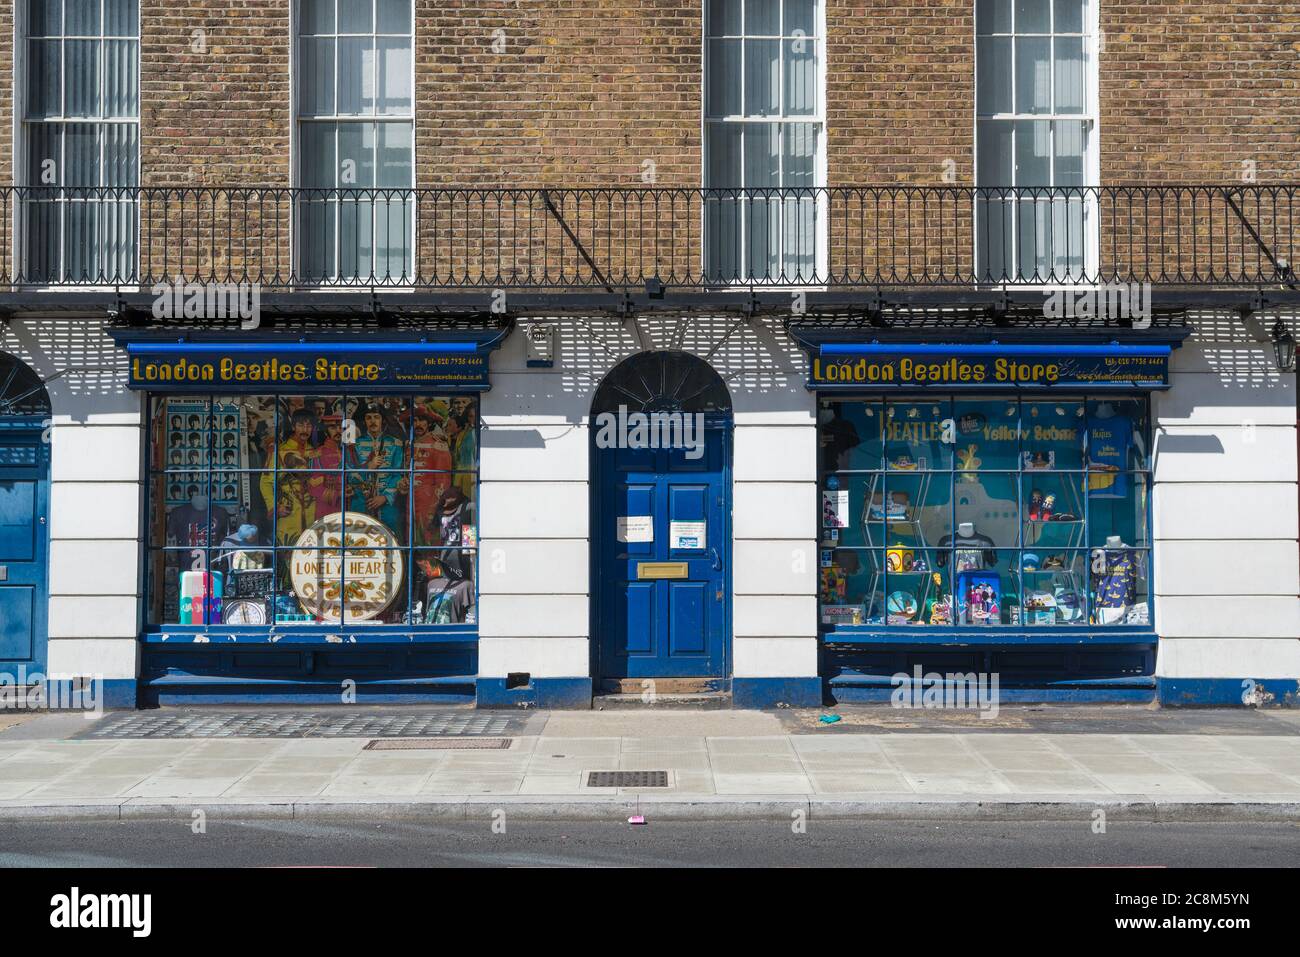 The London Beatles Store, a shop on Baker Street selling Beatles memorabilia, London, England, UK Stock Photo